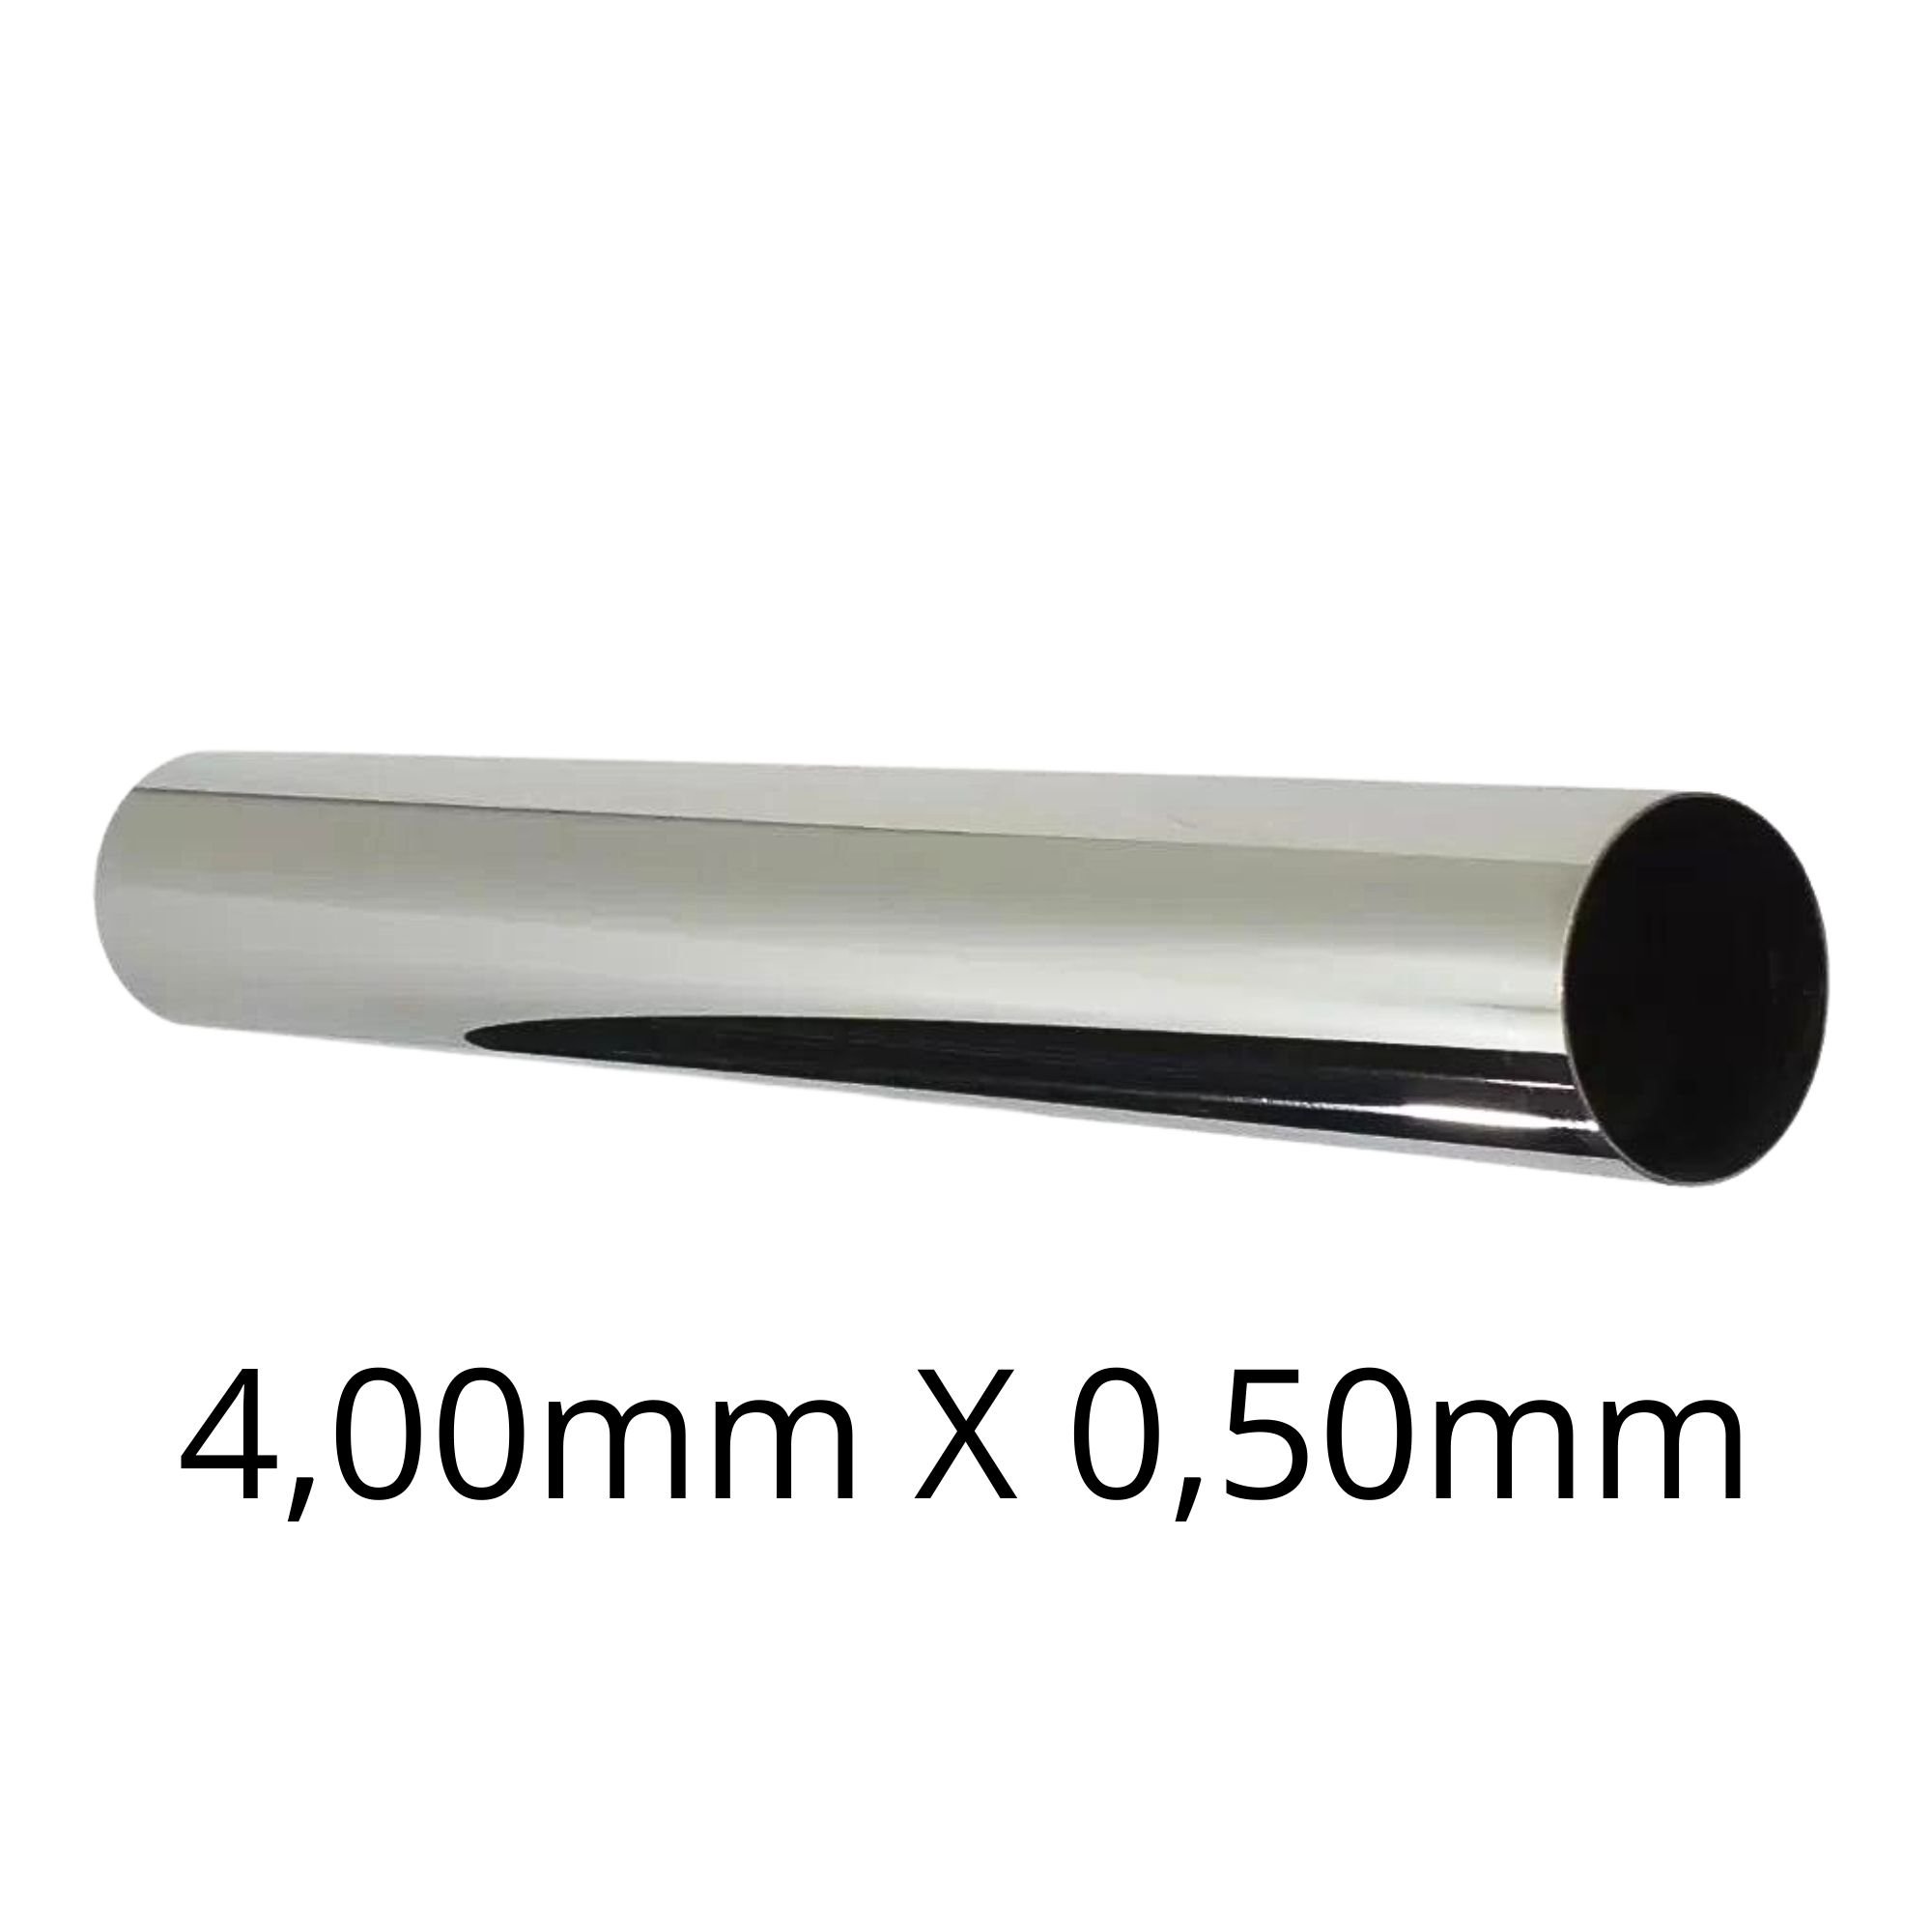 Tubo Inox - 04,00mm X 0,50mm - Polido - 304/l - C/c - 10 Cm